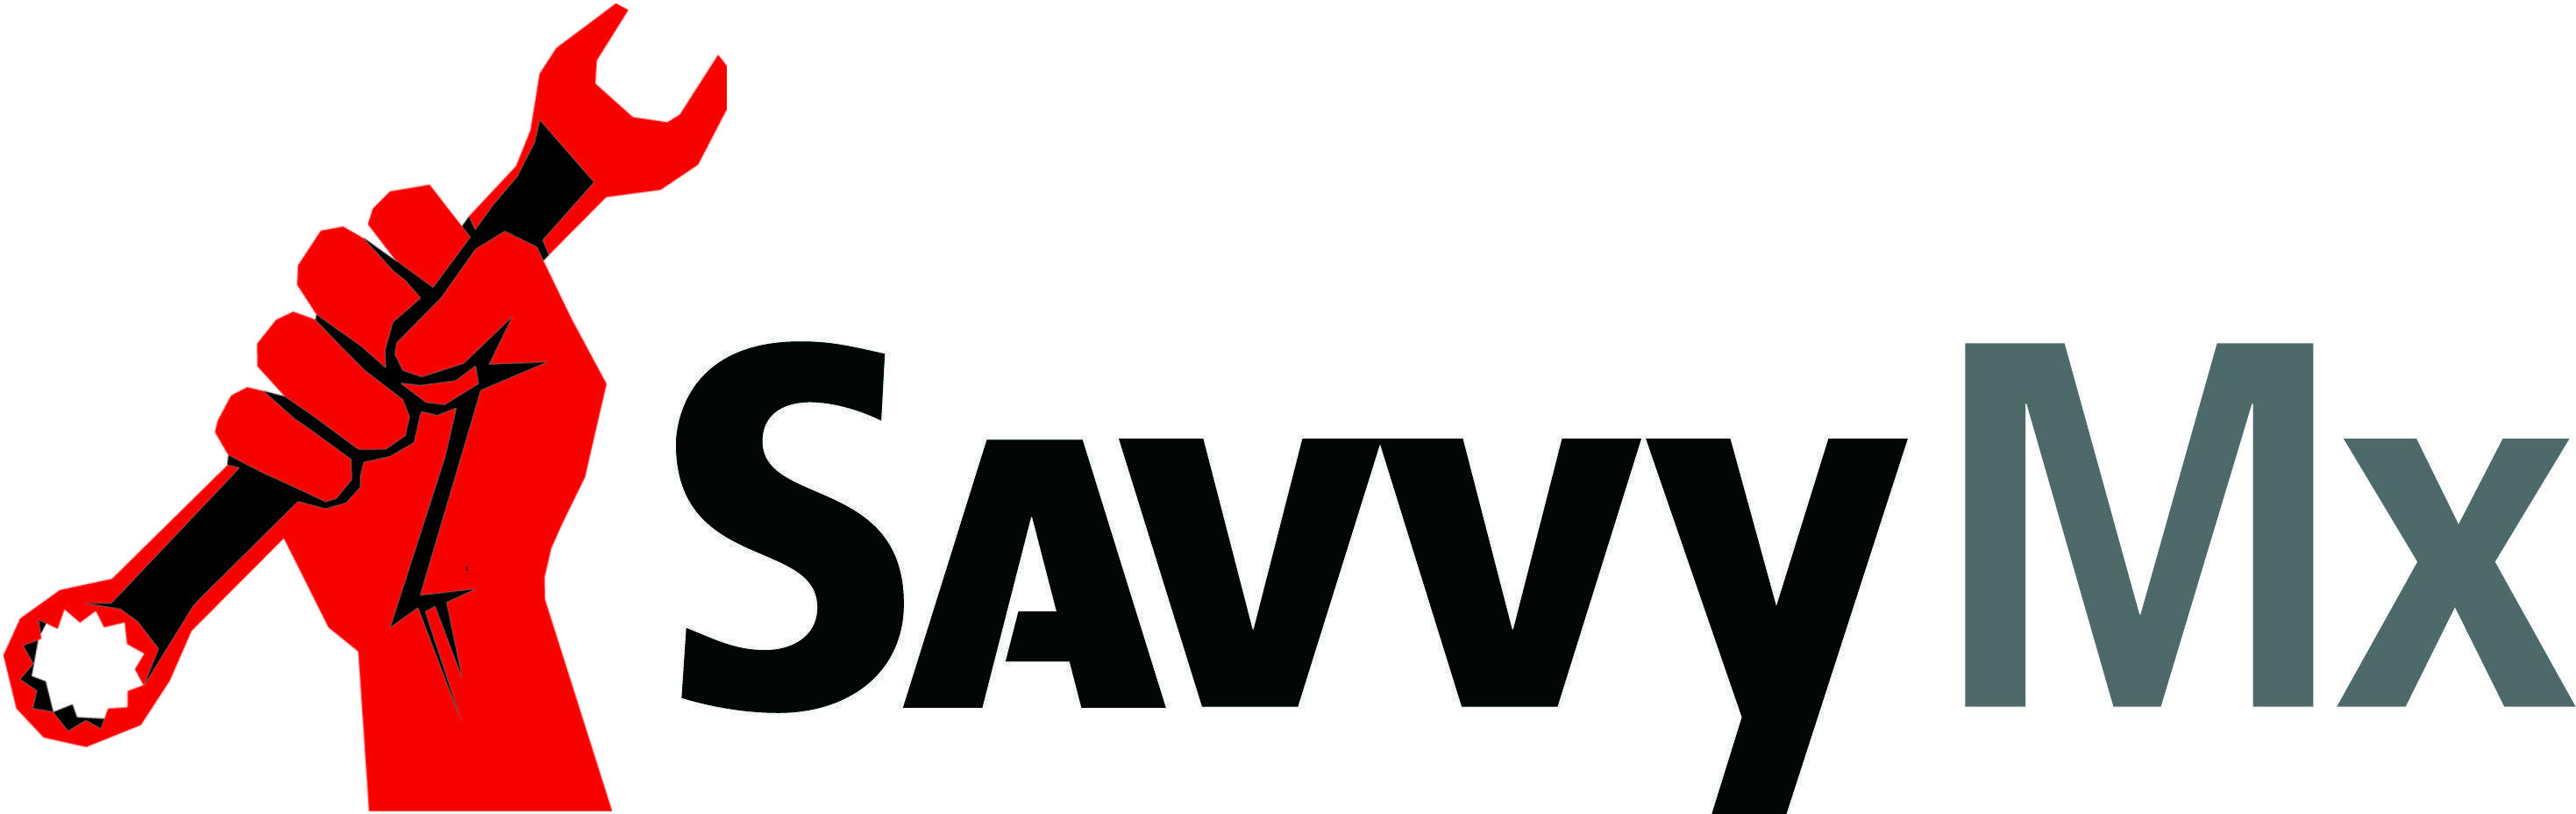 Savvy Logo - Savvymx Logo Hi Res